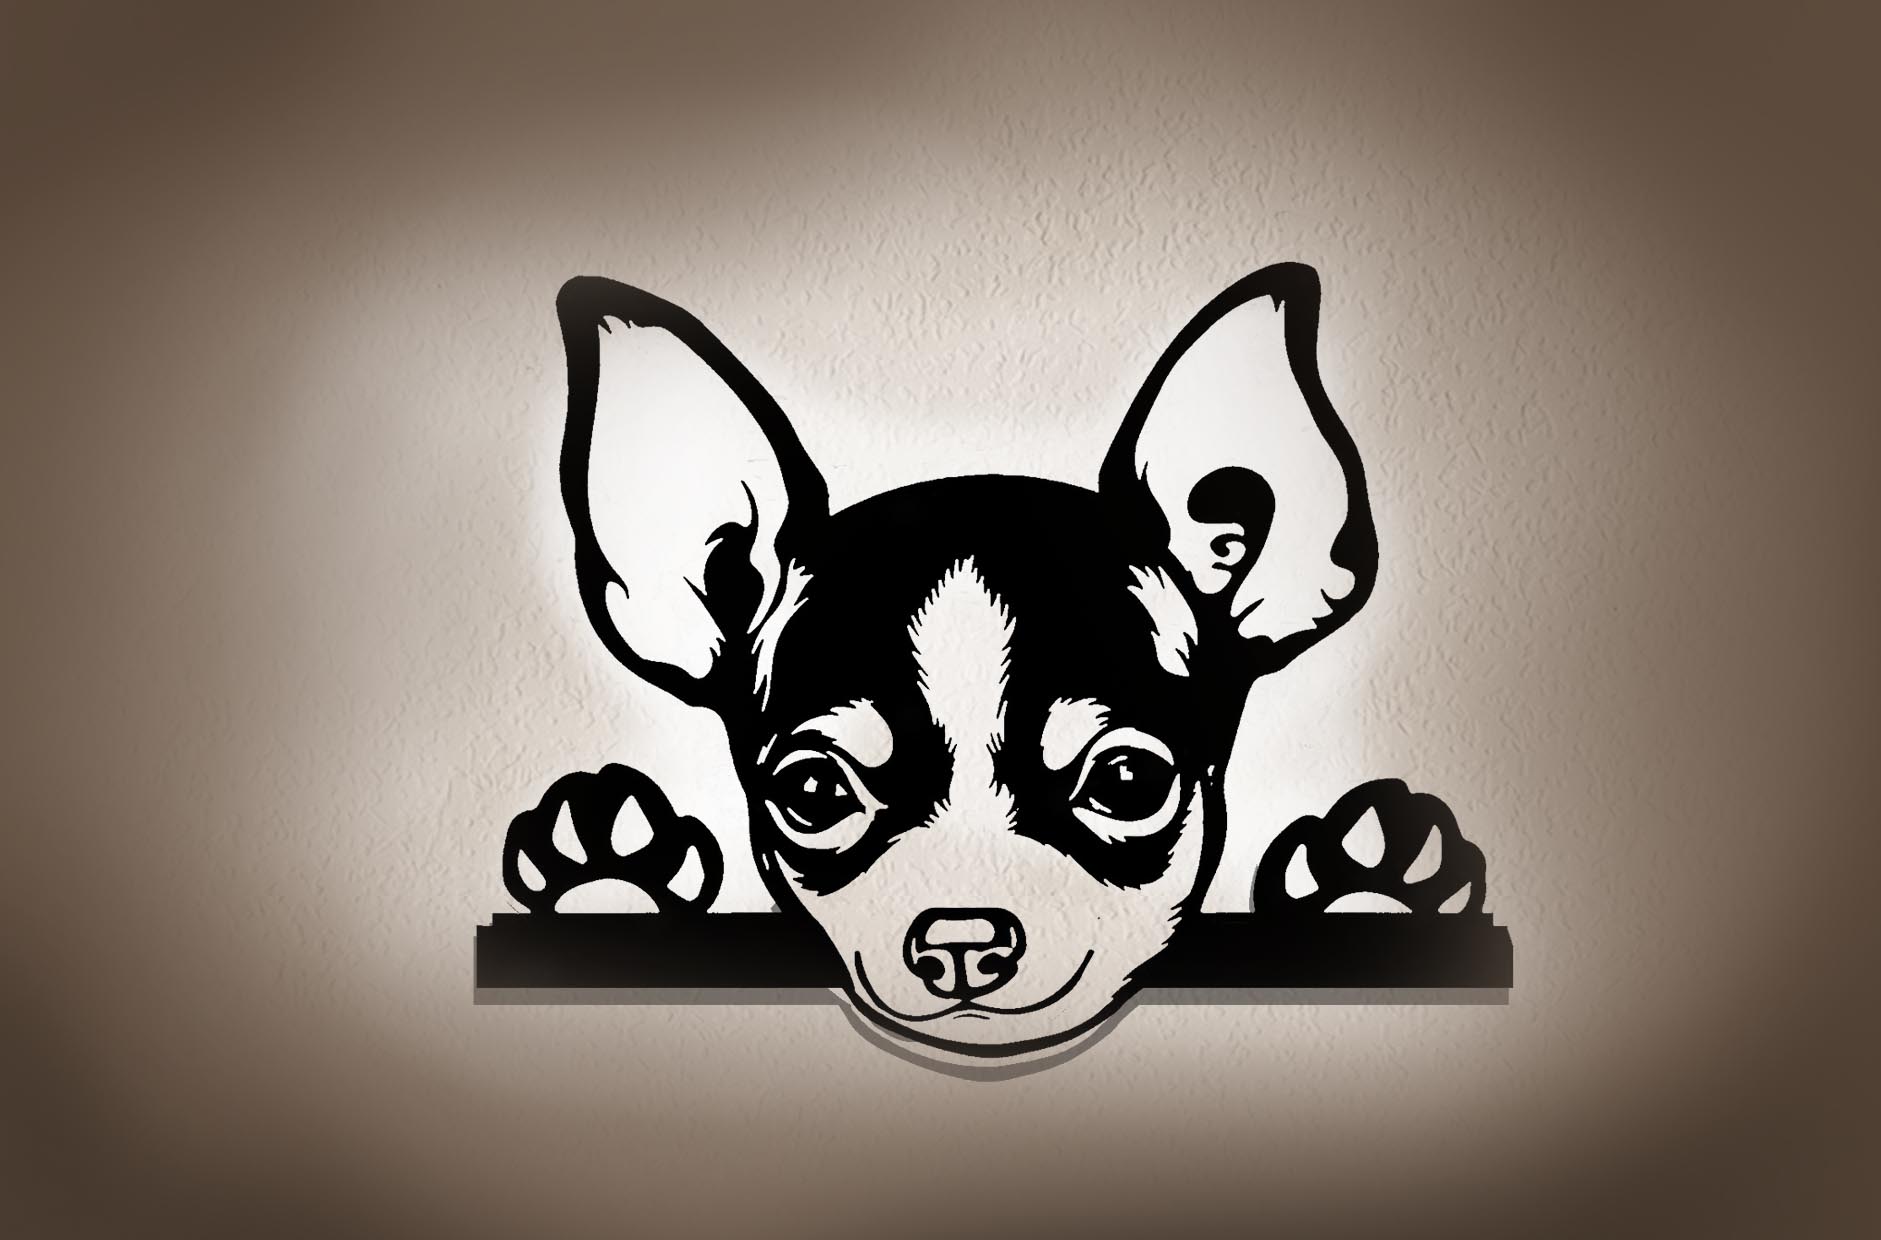 3DWandbild Hunde aus Holz mit LED Licht Tiermotivschmuck